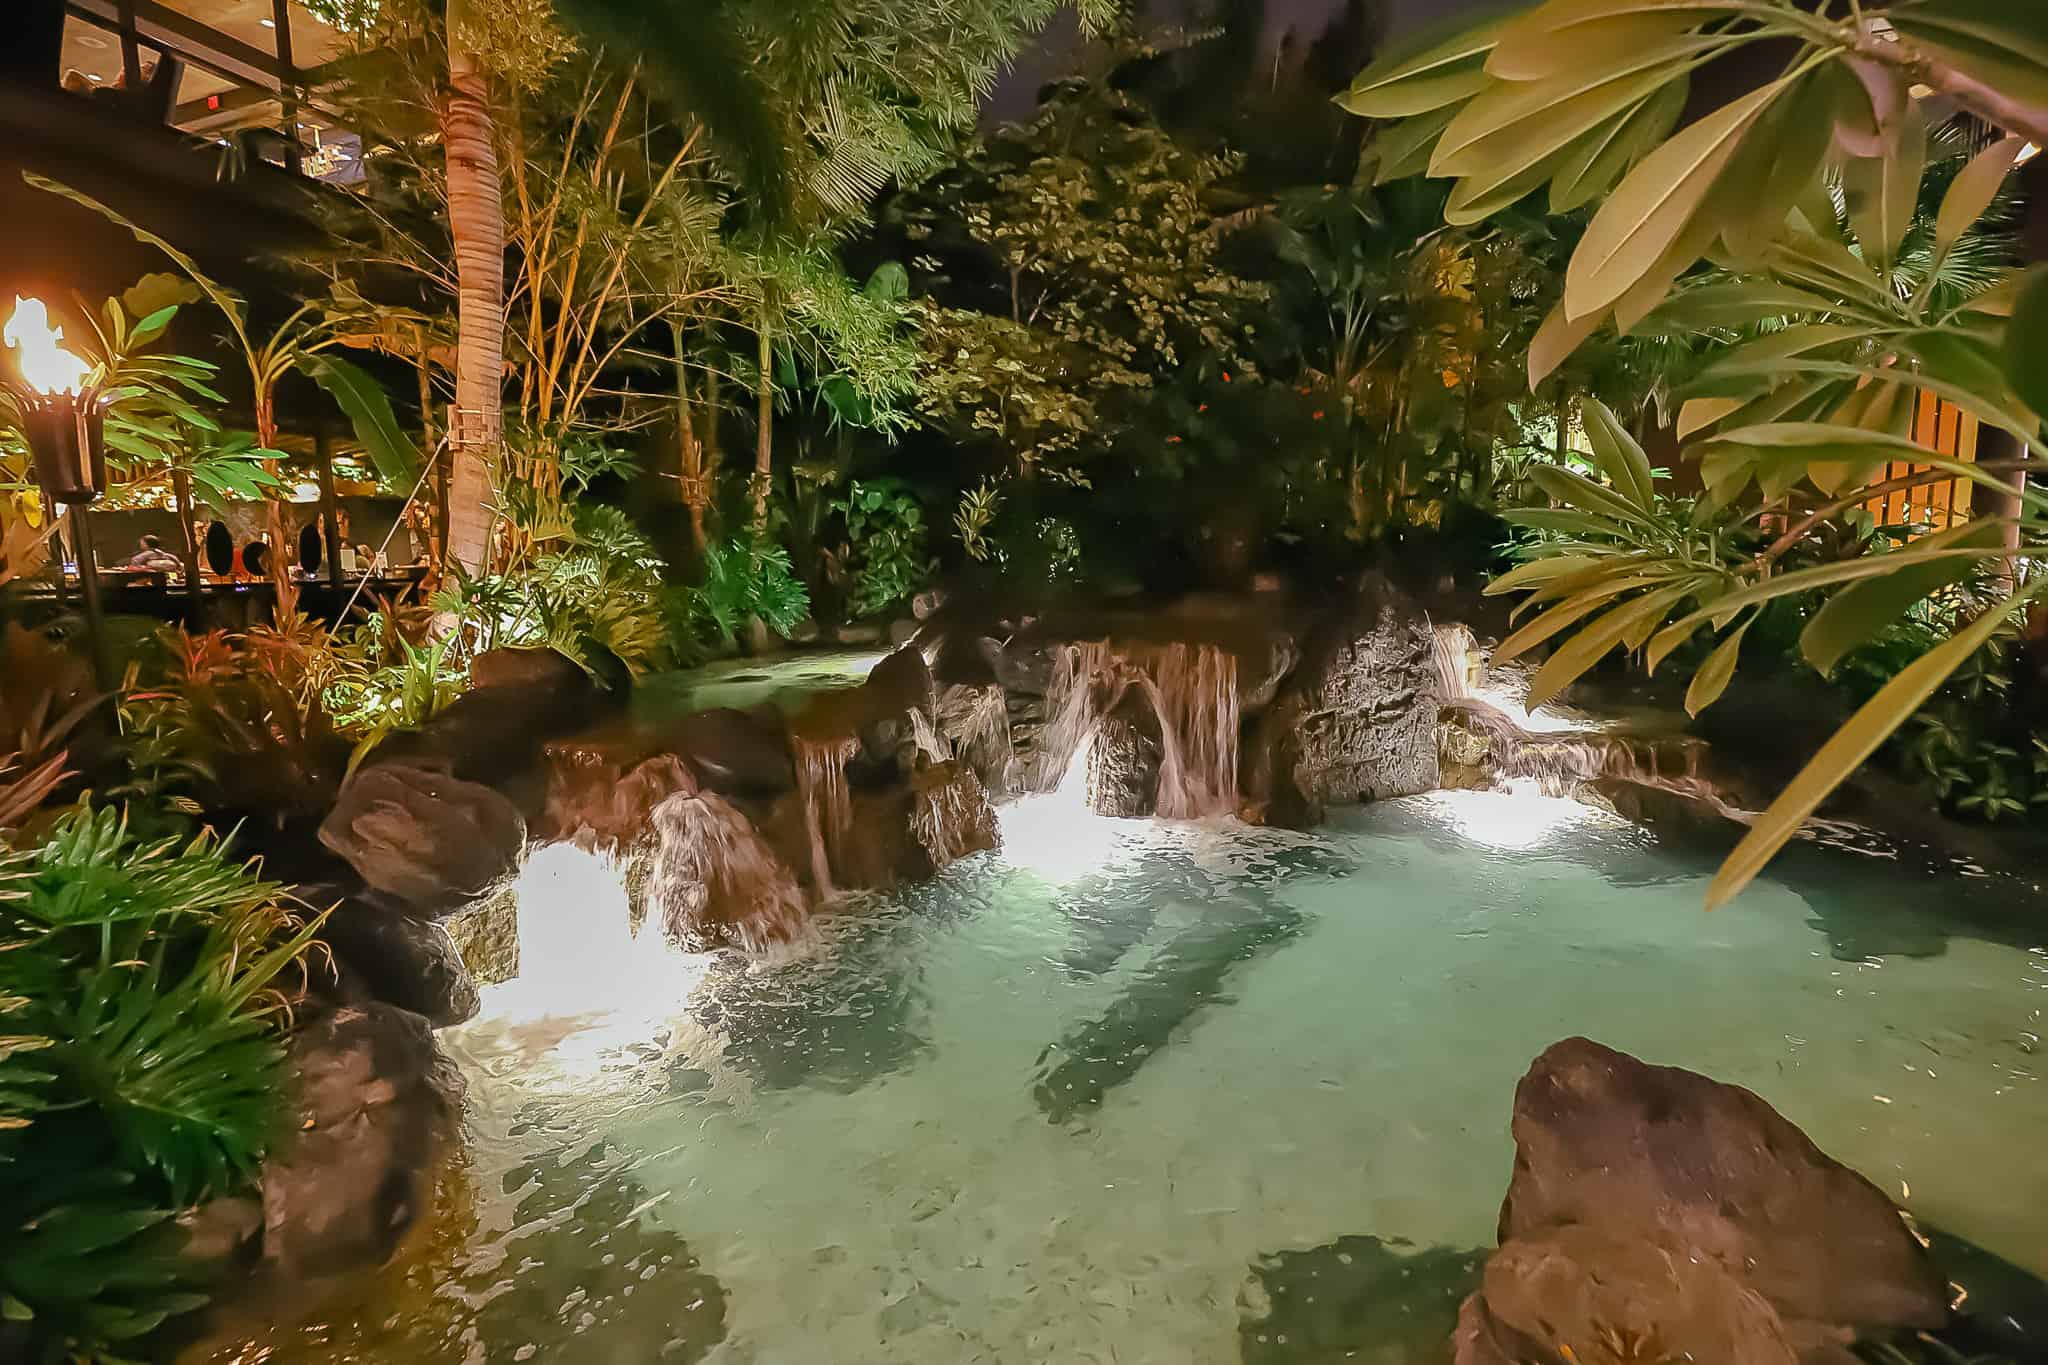 Waterfall at the entrance of Disney's Polynesian